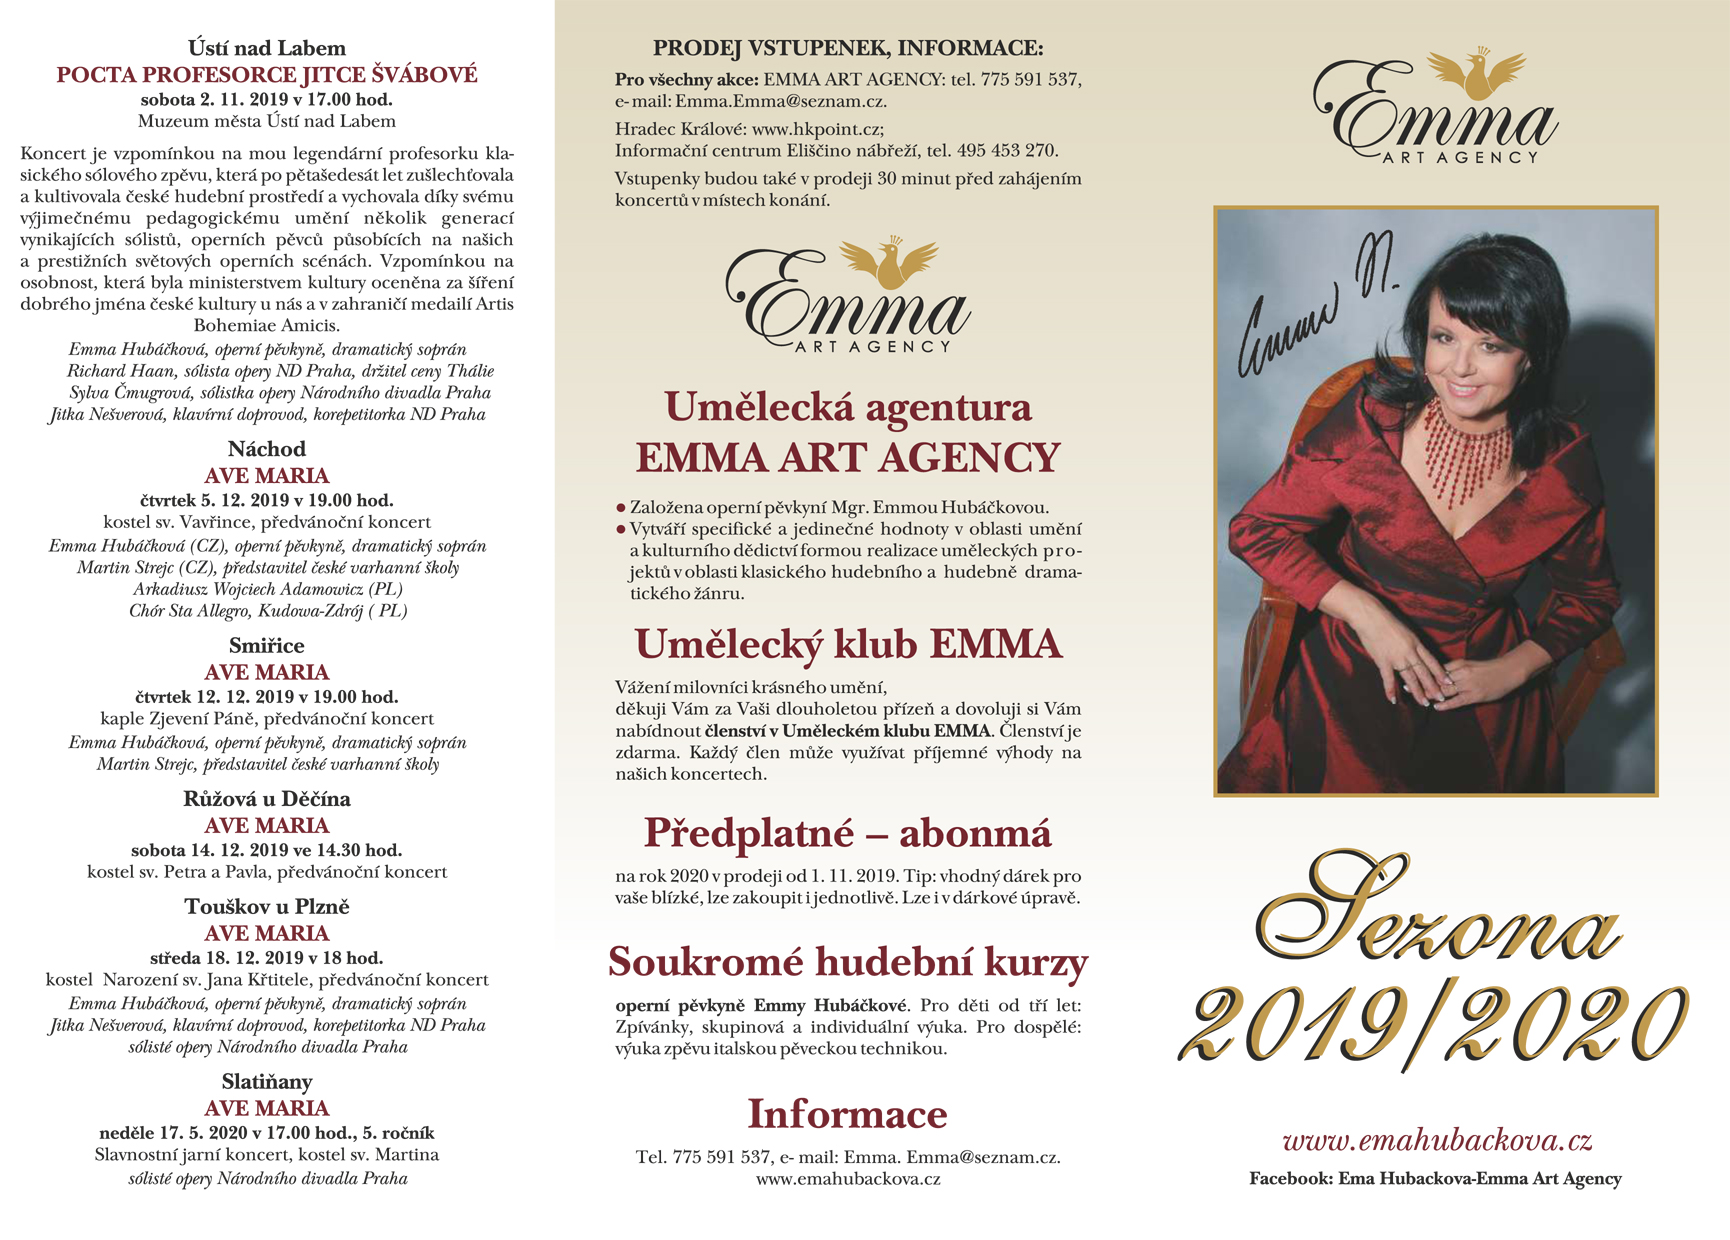 sezona 2019/2020 Emma art agency